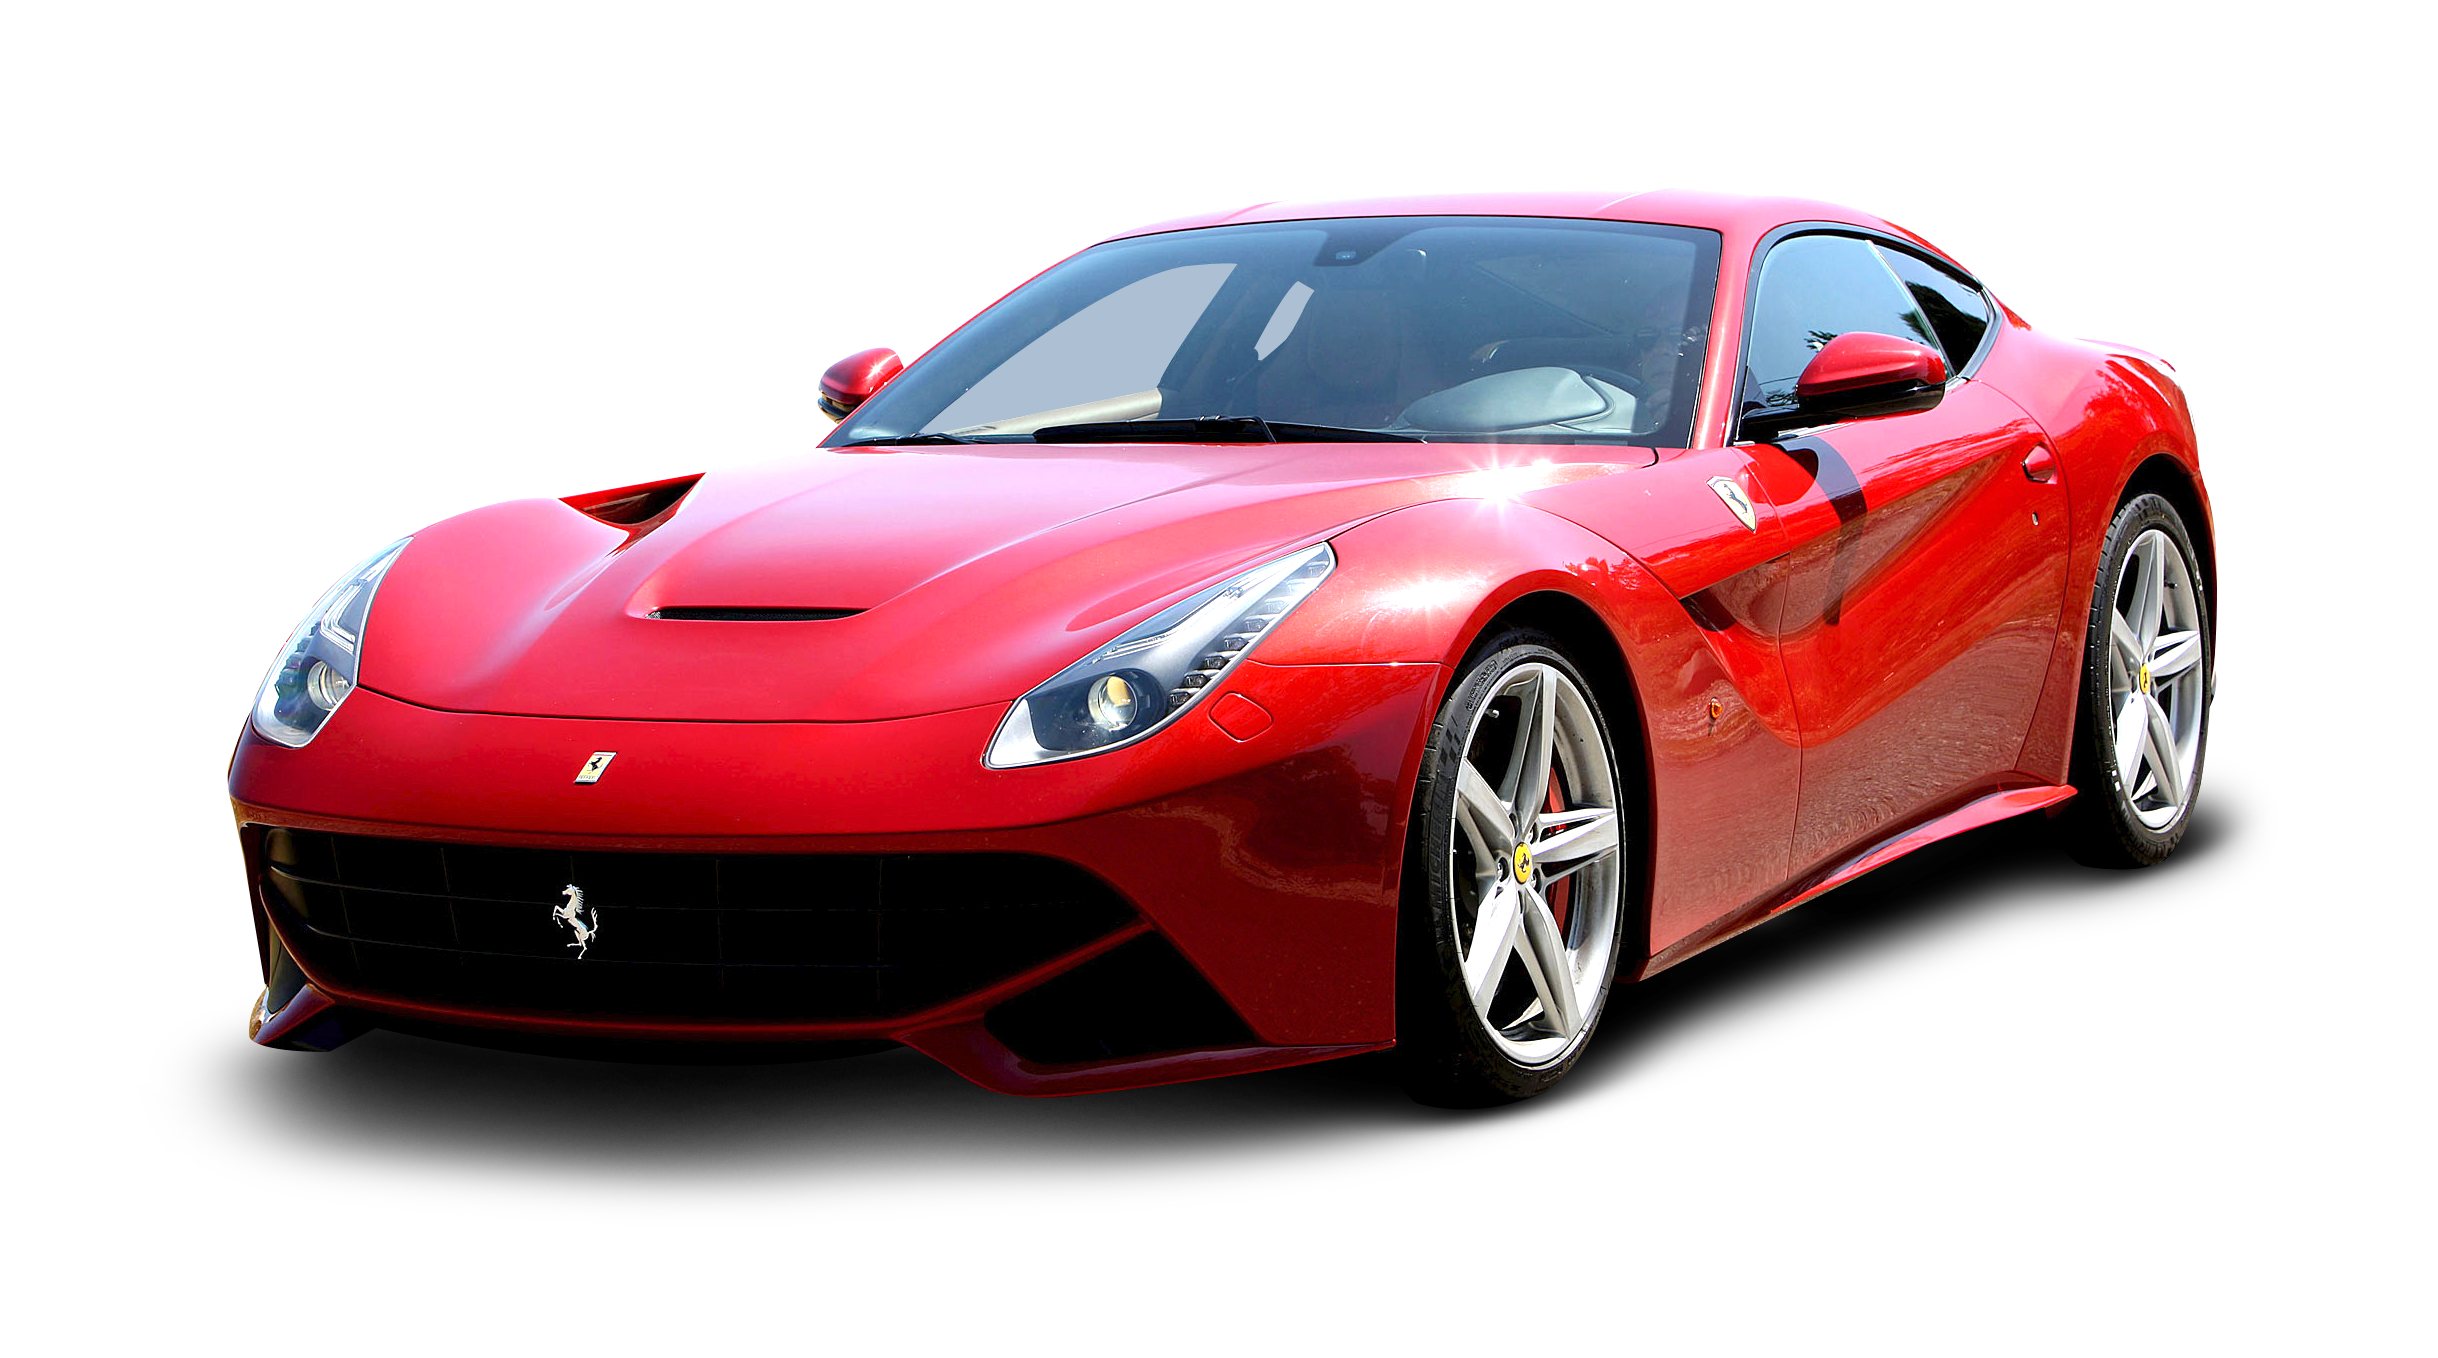 Red Ferrari F12 Berlinetta Car